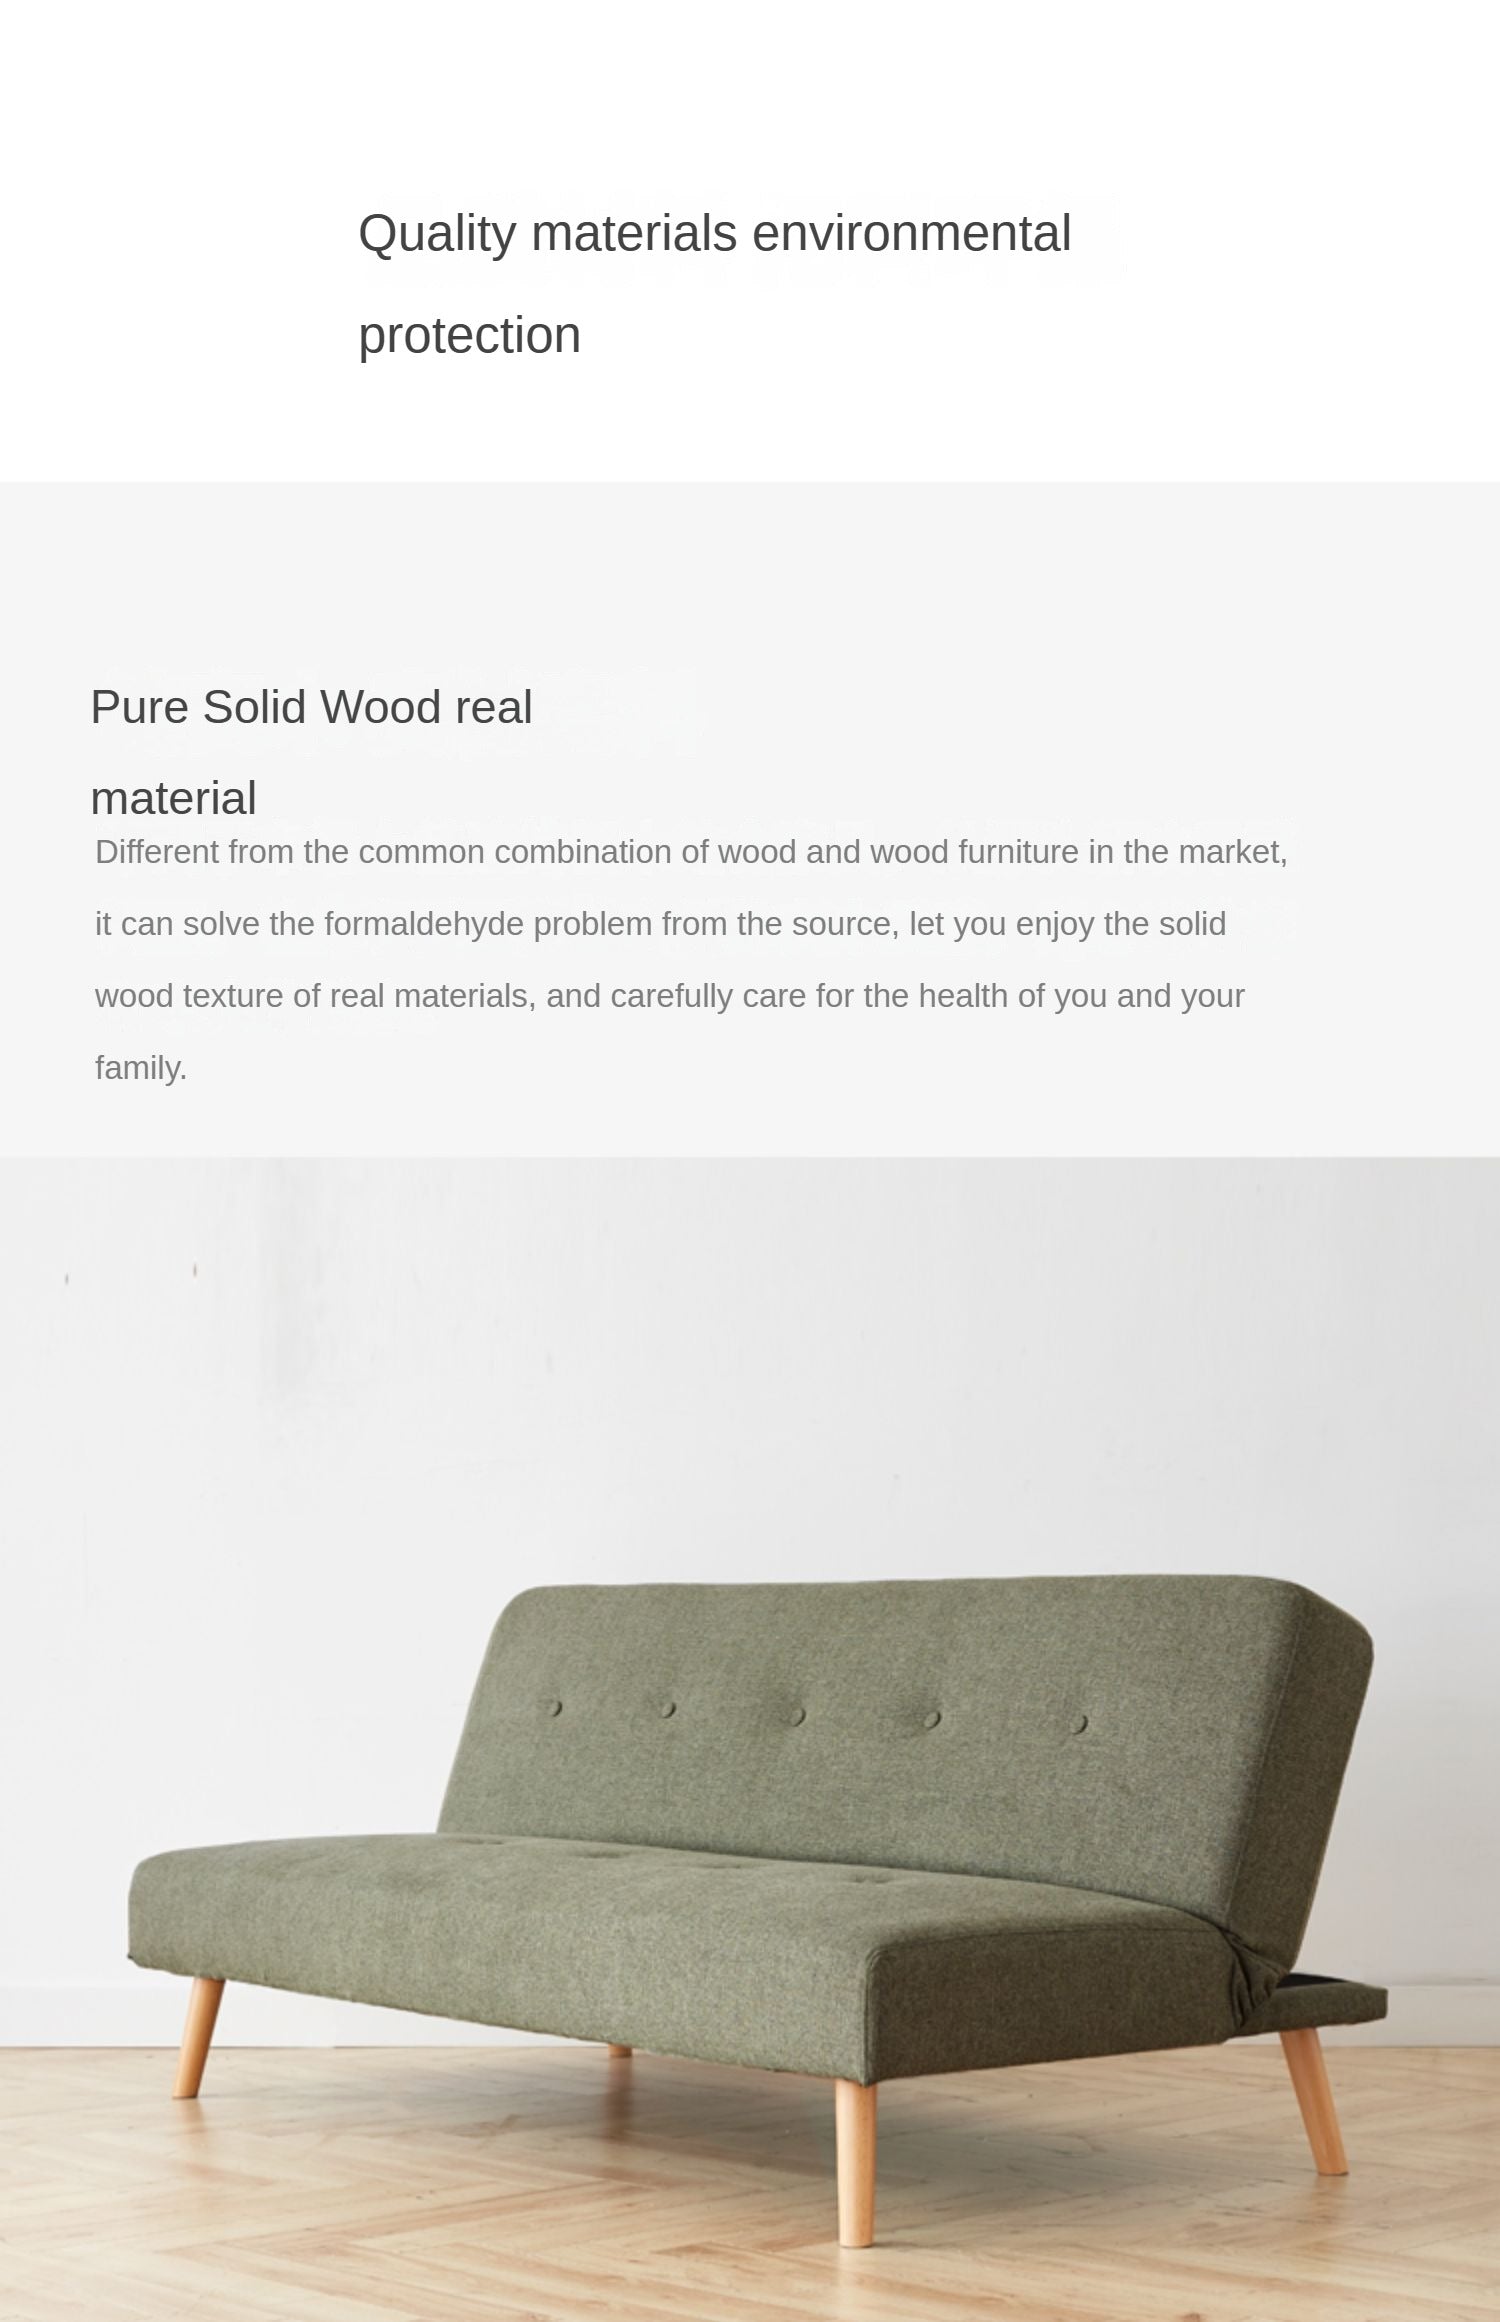 Sleeper sofa modern minimalist+